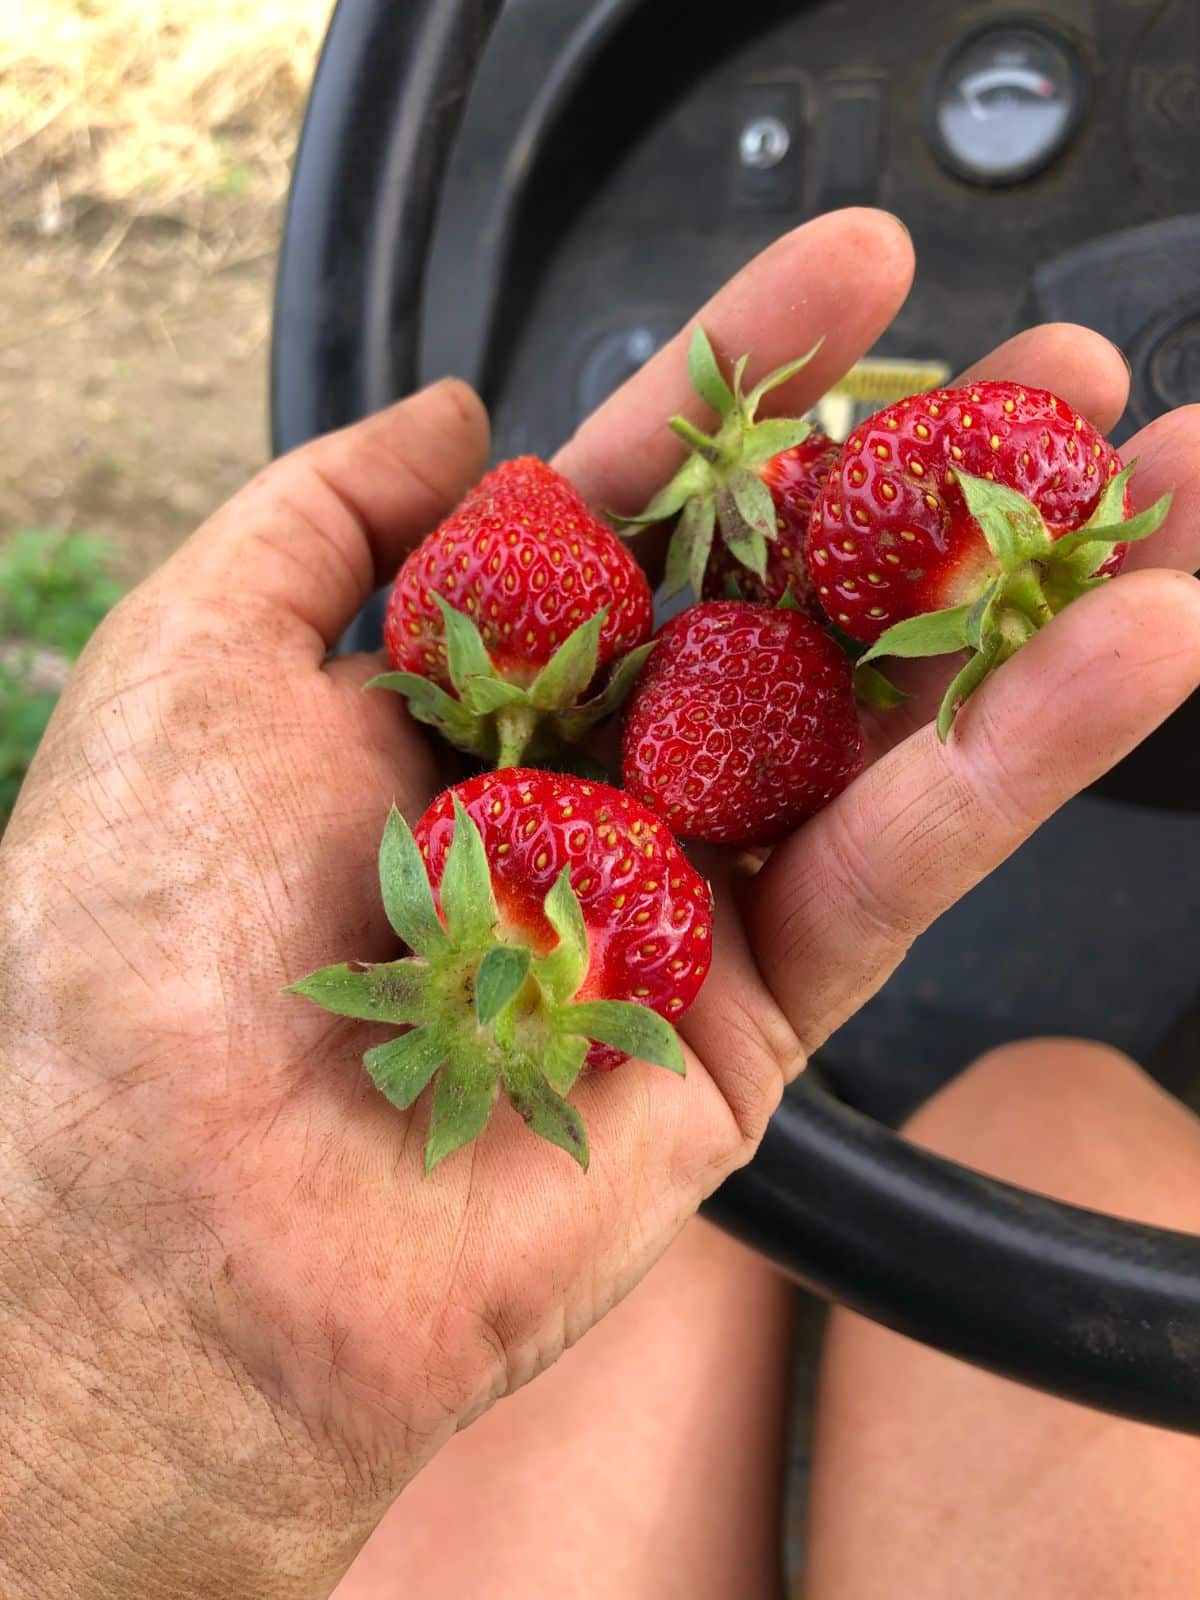 Ripe strawberries held in a picker's hand